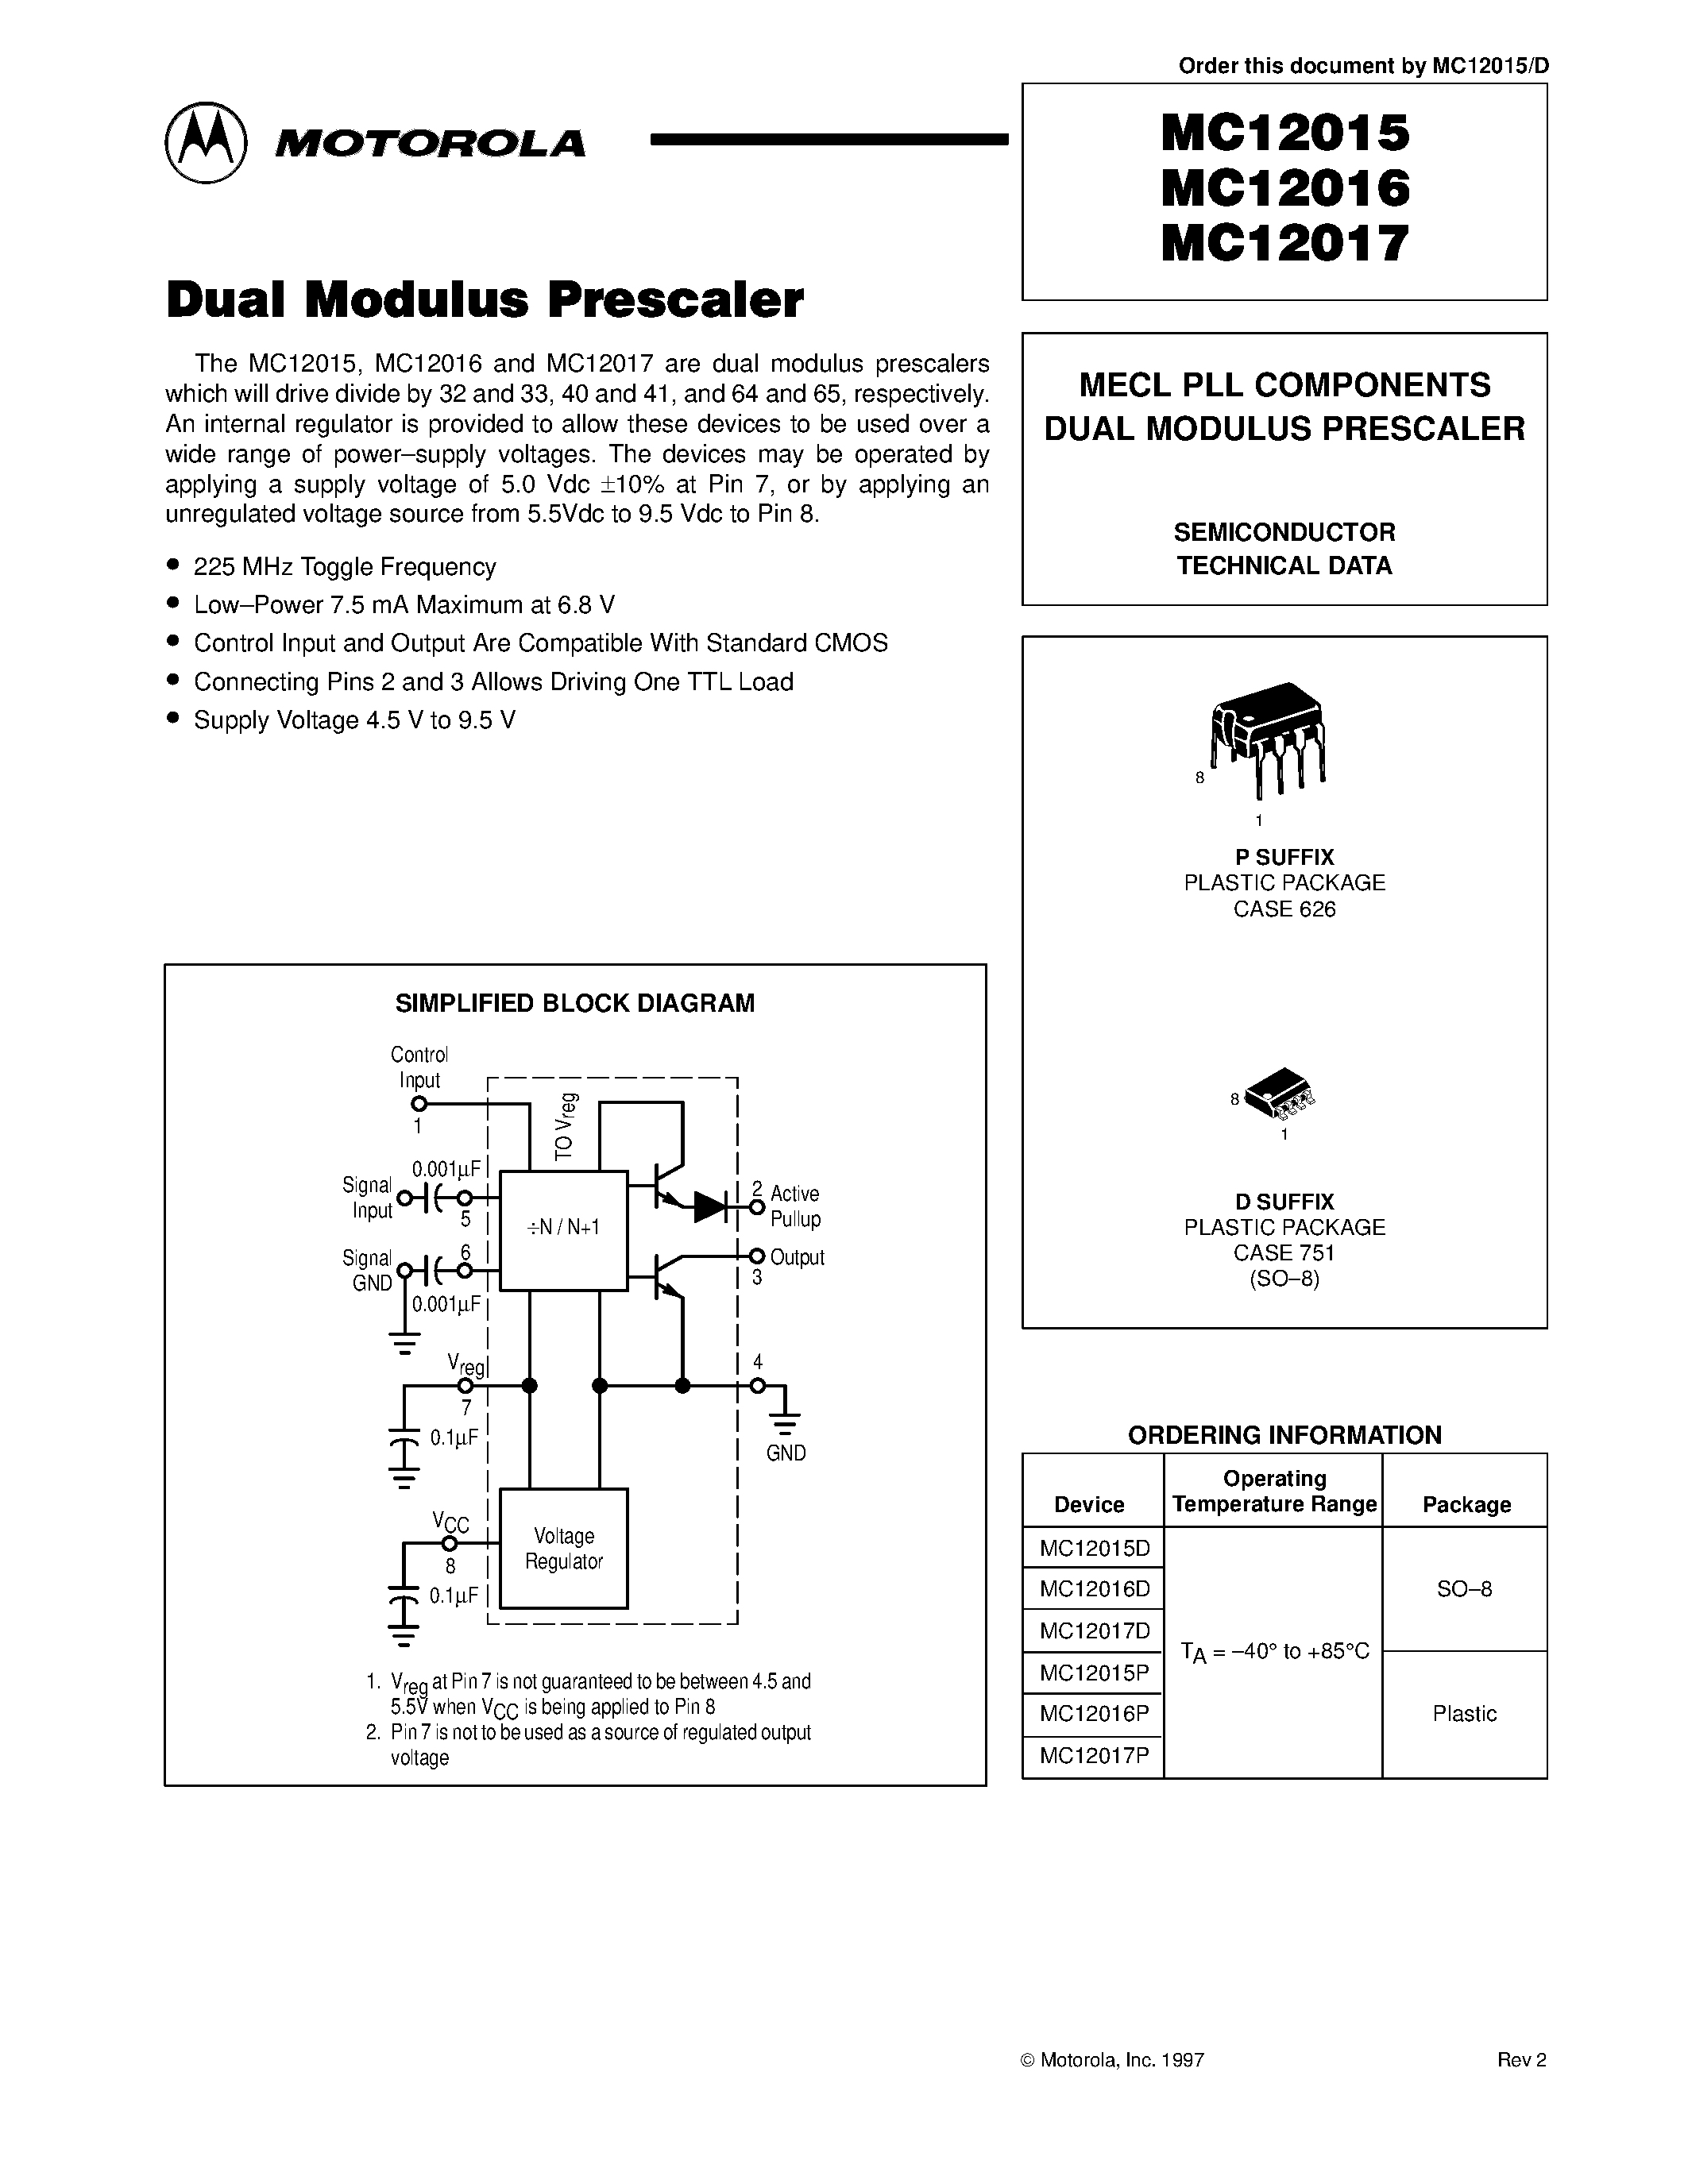 Datasheet MC12017P - MECL PLL COMPONENTS DUAL MODULUS PRESCALER page 1